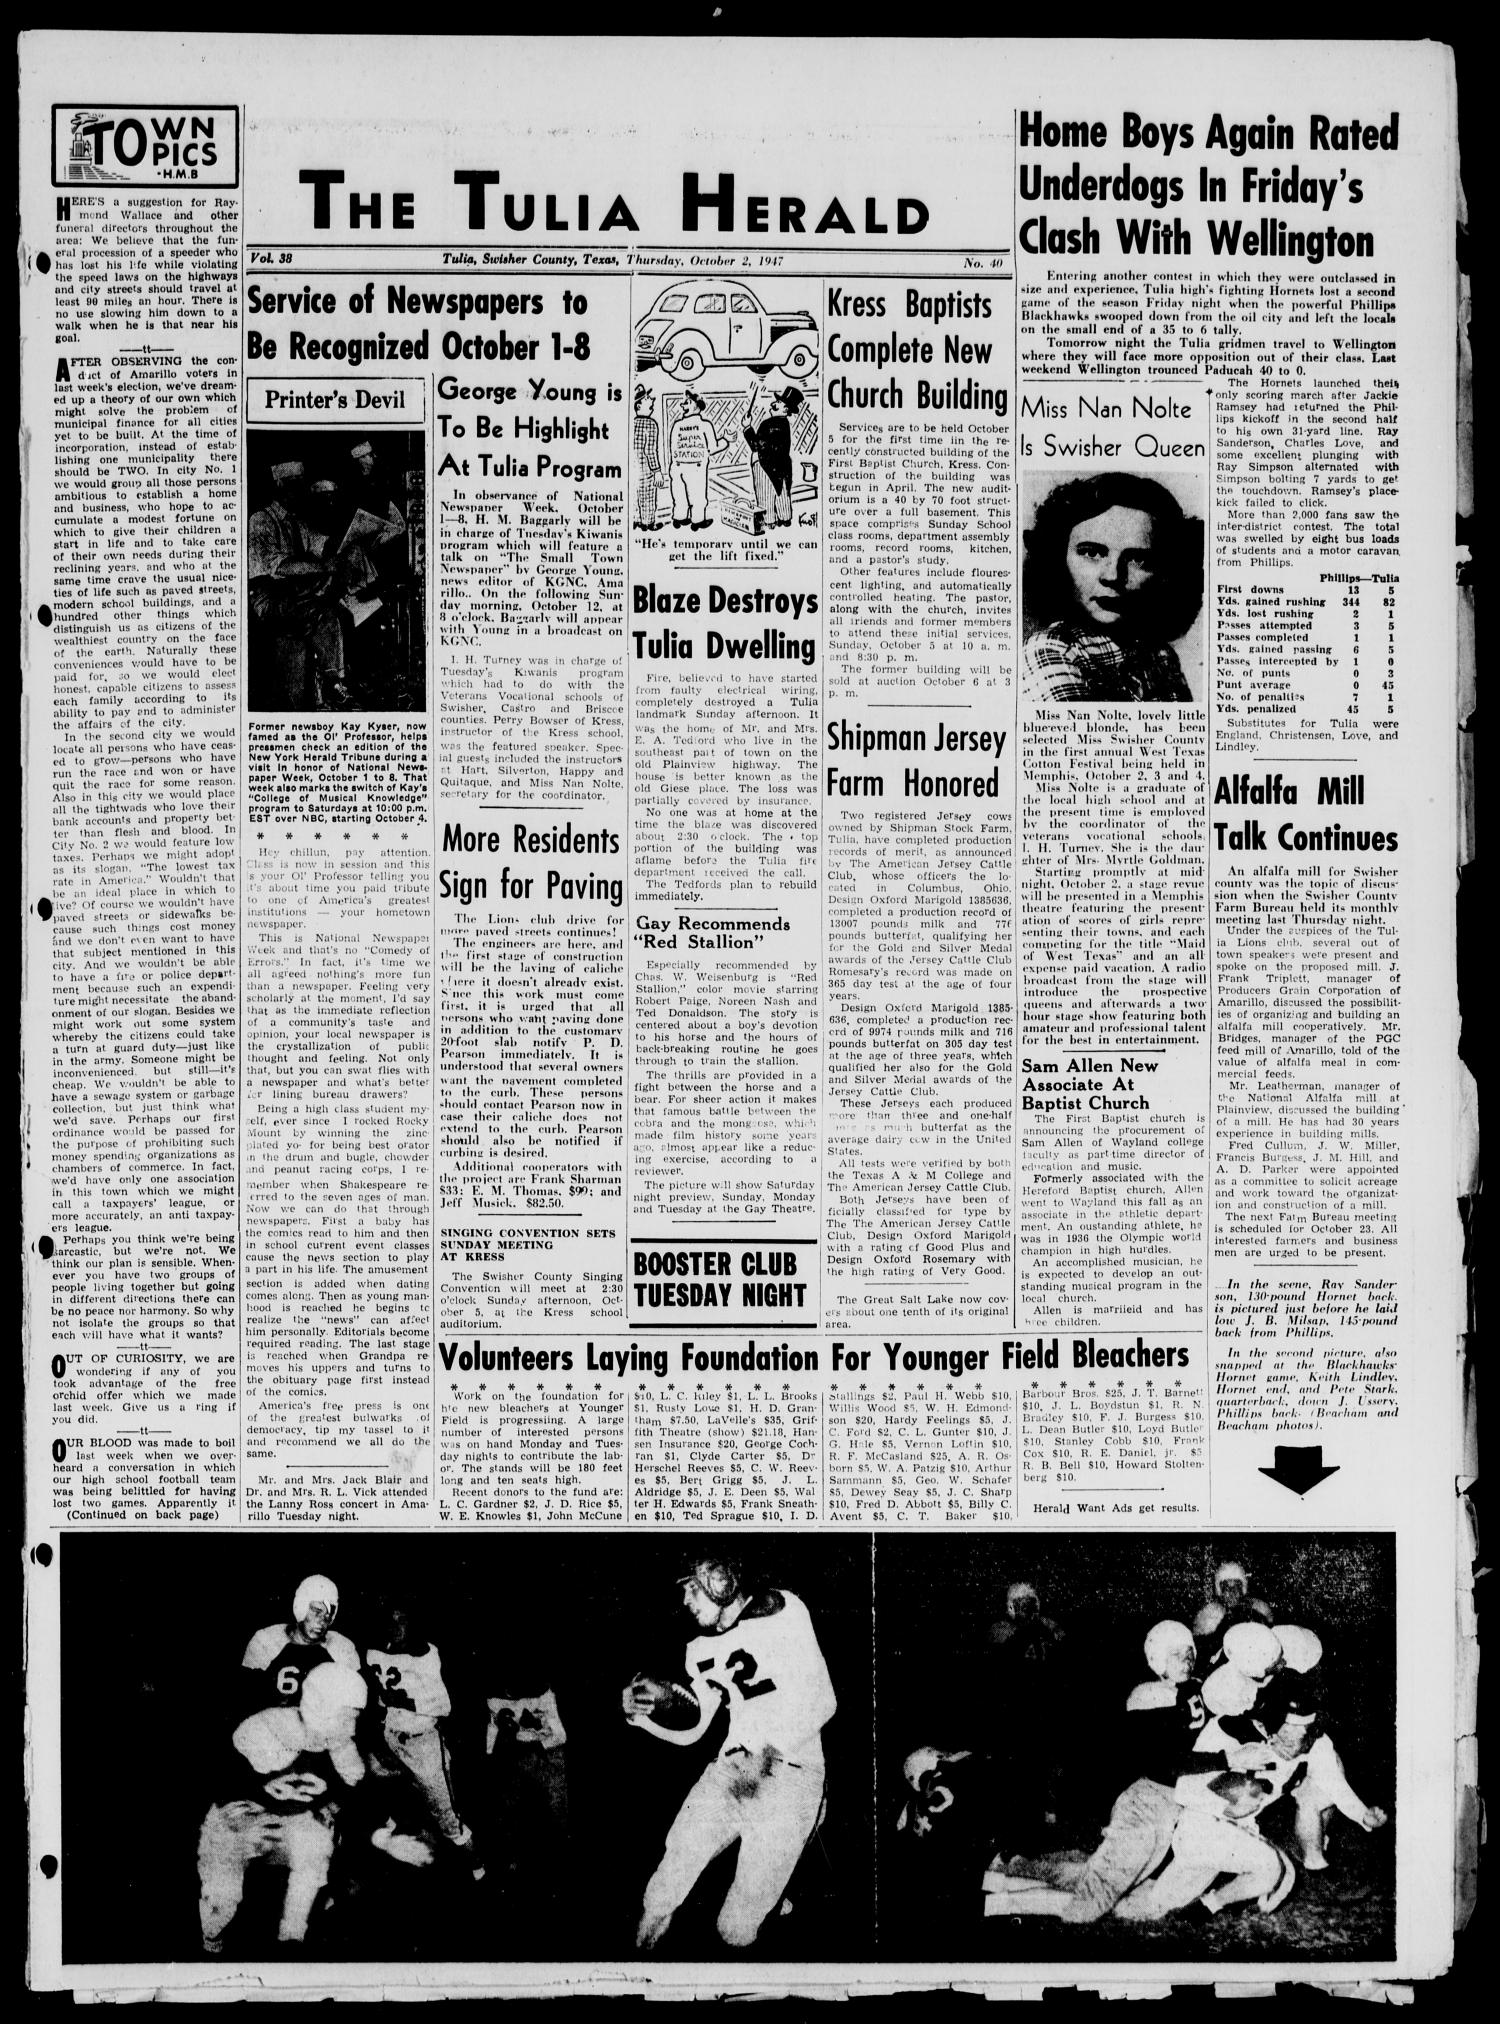 The Tulia Herald (Tulia, Tex), Vol. 38, No. 40, Ed. 1, Thursday, October 2, 1947
                                                
                                                    1
                                                